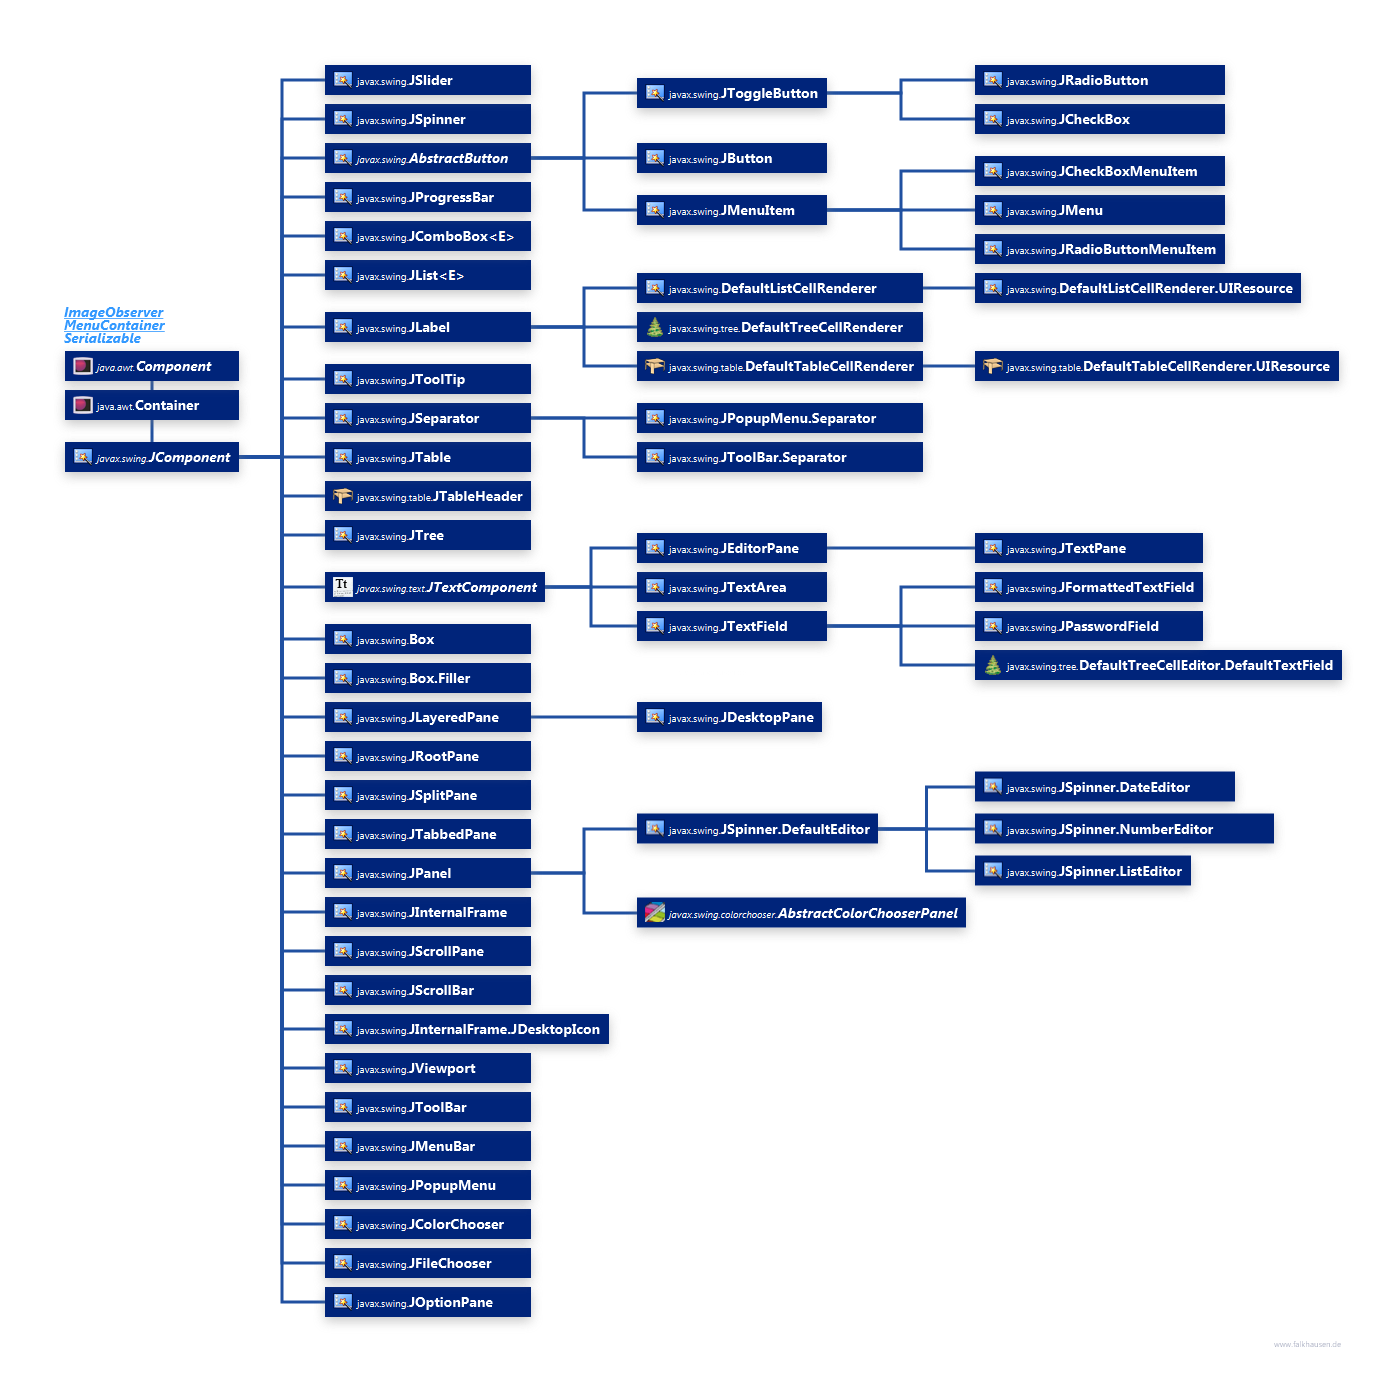 JComponent Hierarchy class diagram and api documentation for Java 7